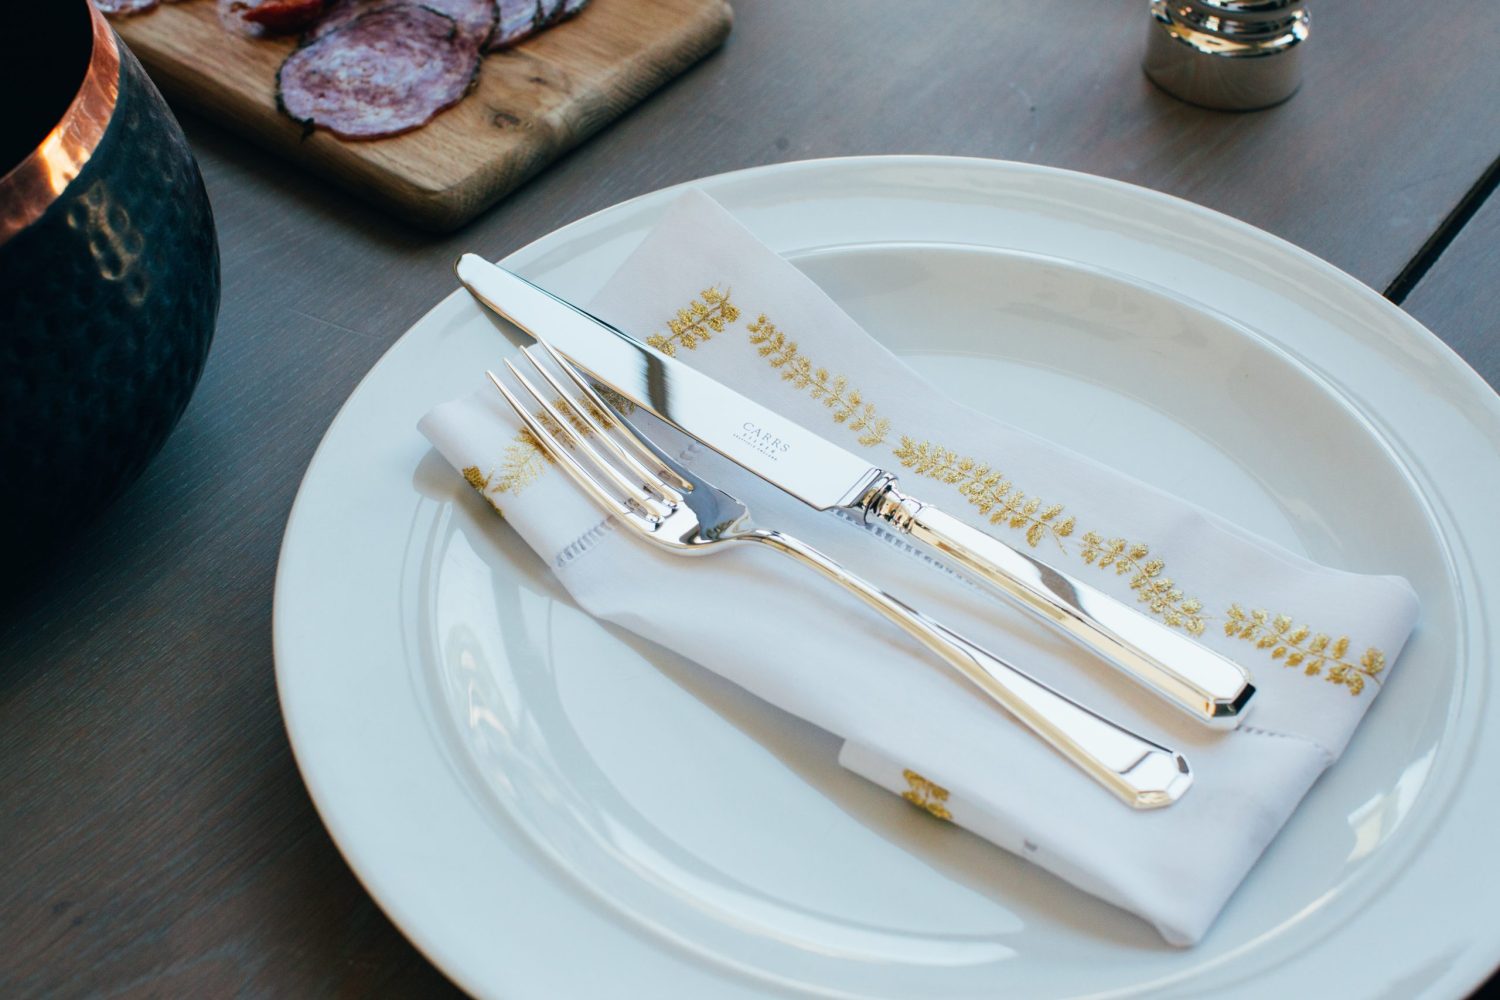 Luxury Hotel Silverware / Silver Hotel Cutlery